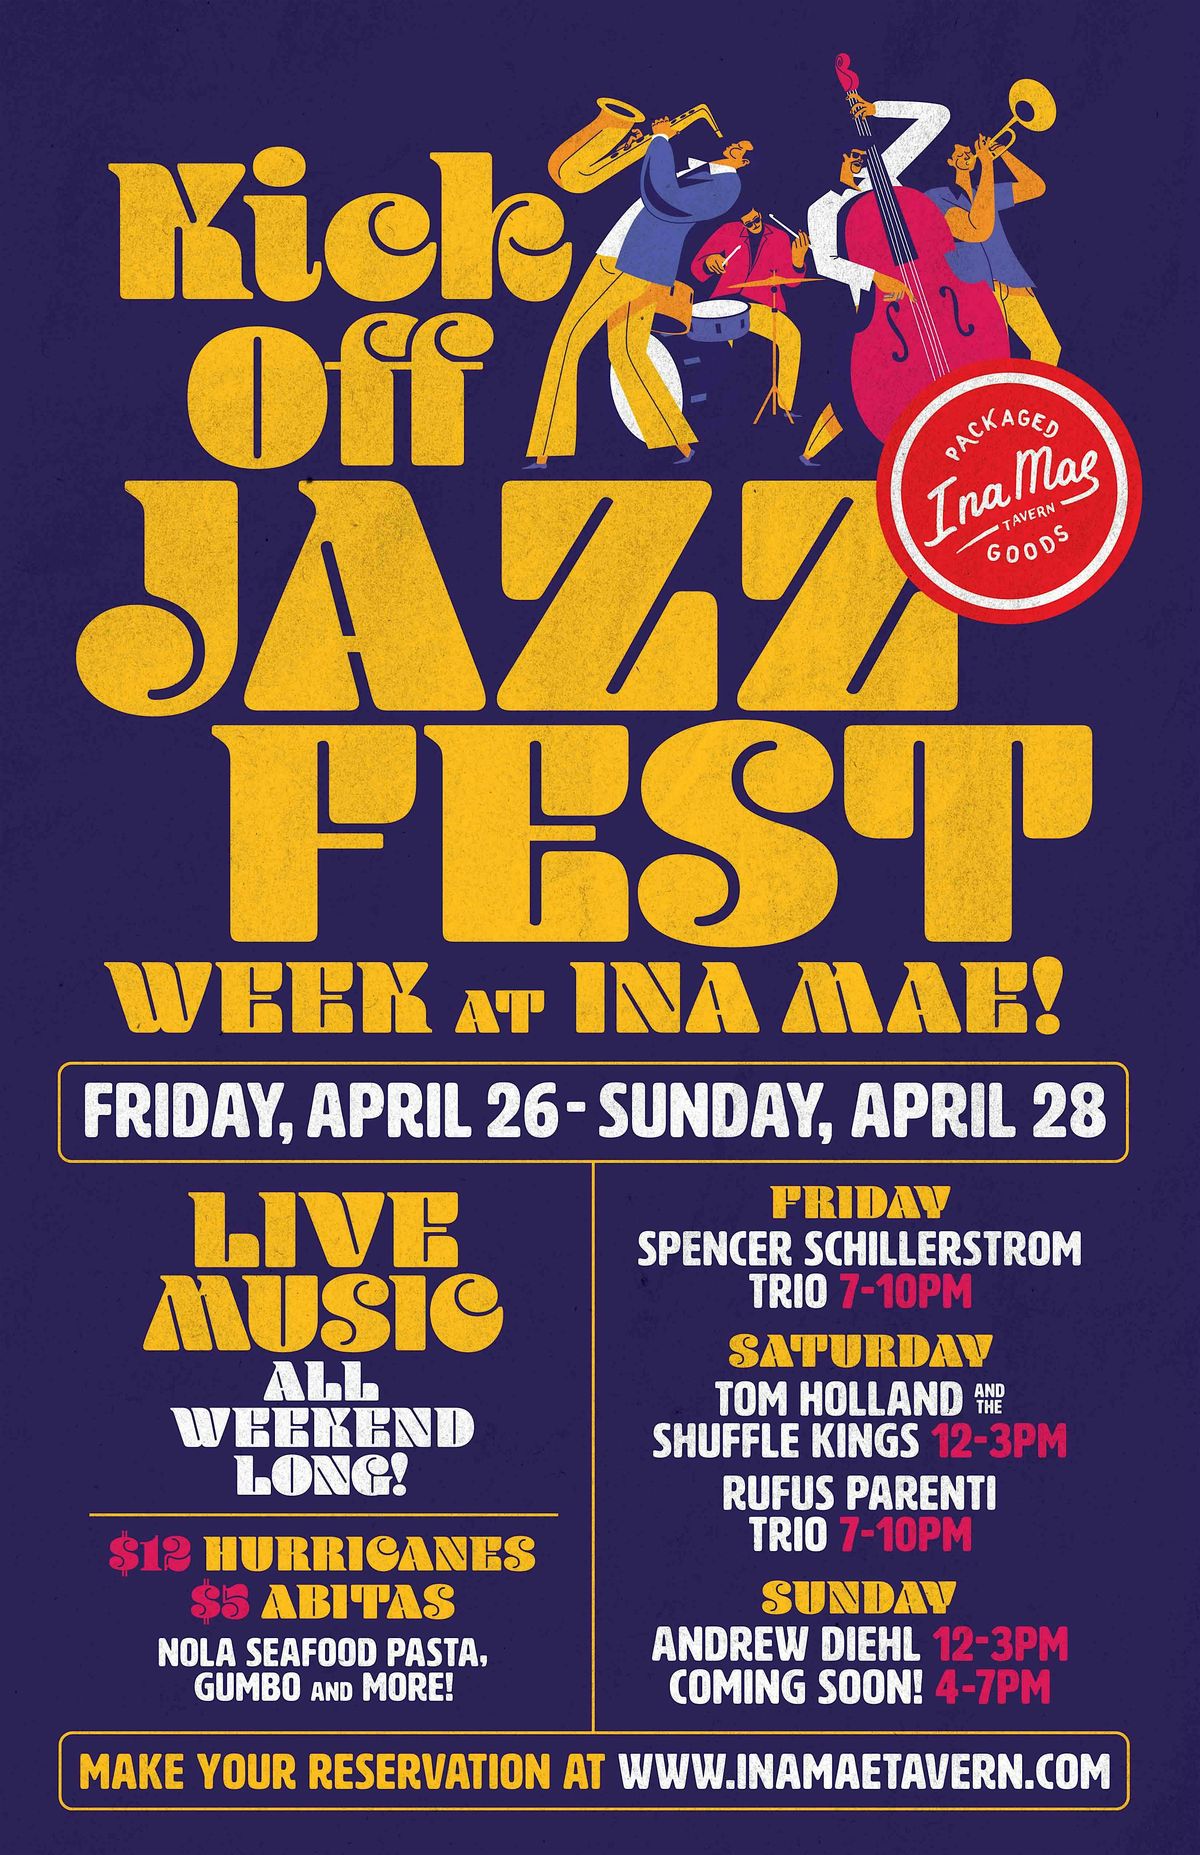 Jazz Fest Week at Ina Mae